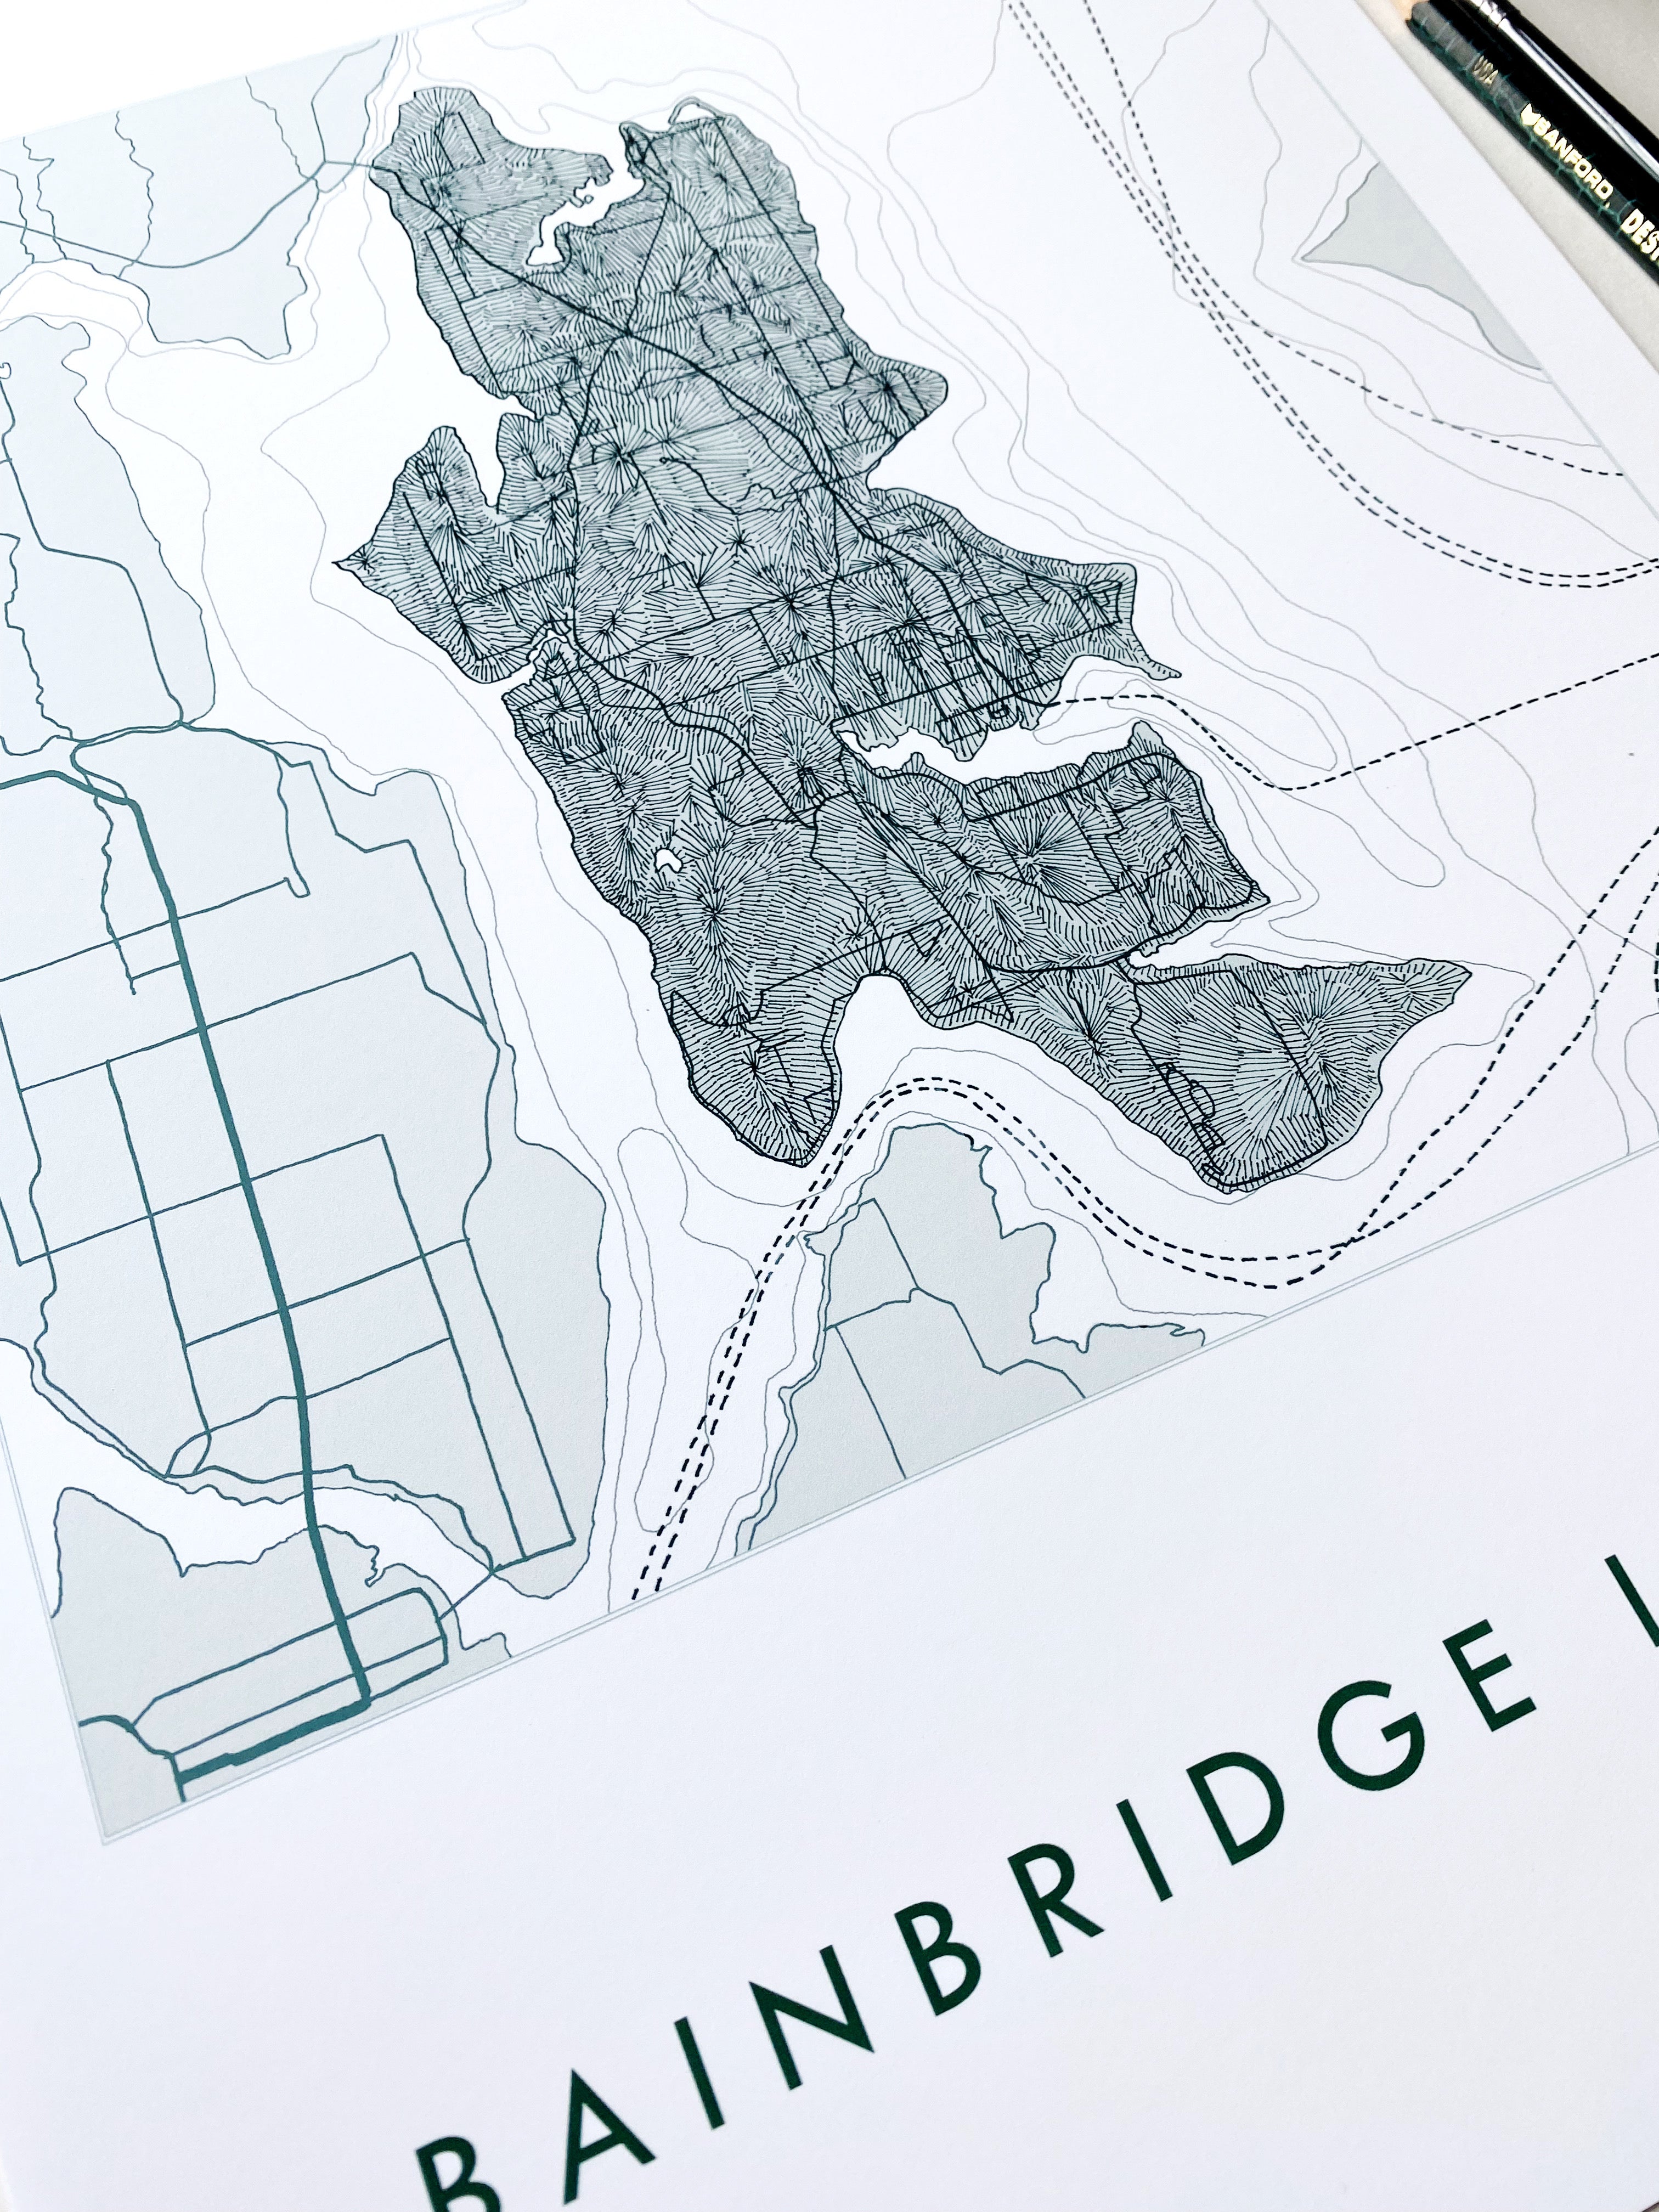 BAINBRIDGE ISLAND Washington Topographic Bathymetric Art Map: PRINT